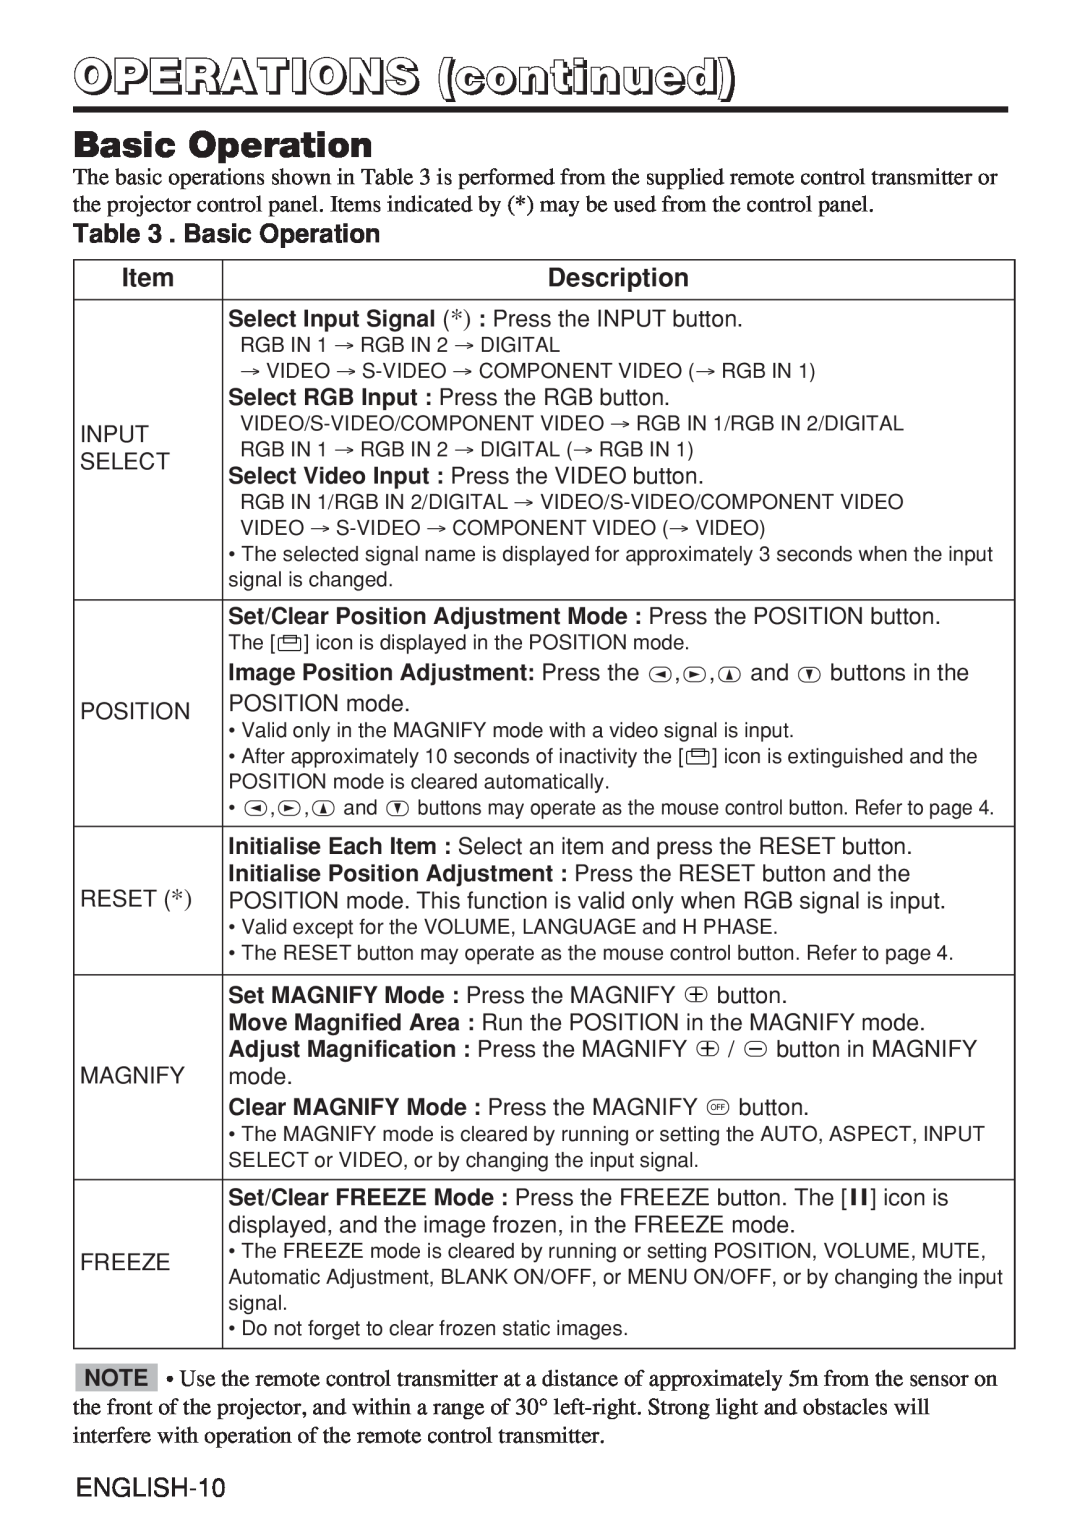 Hitachi CP-X985W user manual OPERATIONS continued, Basic Operation, Description 